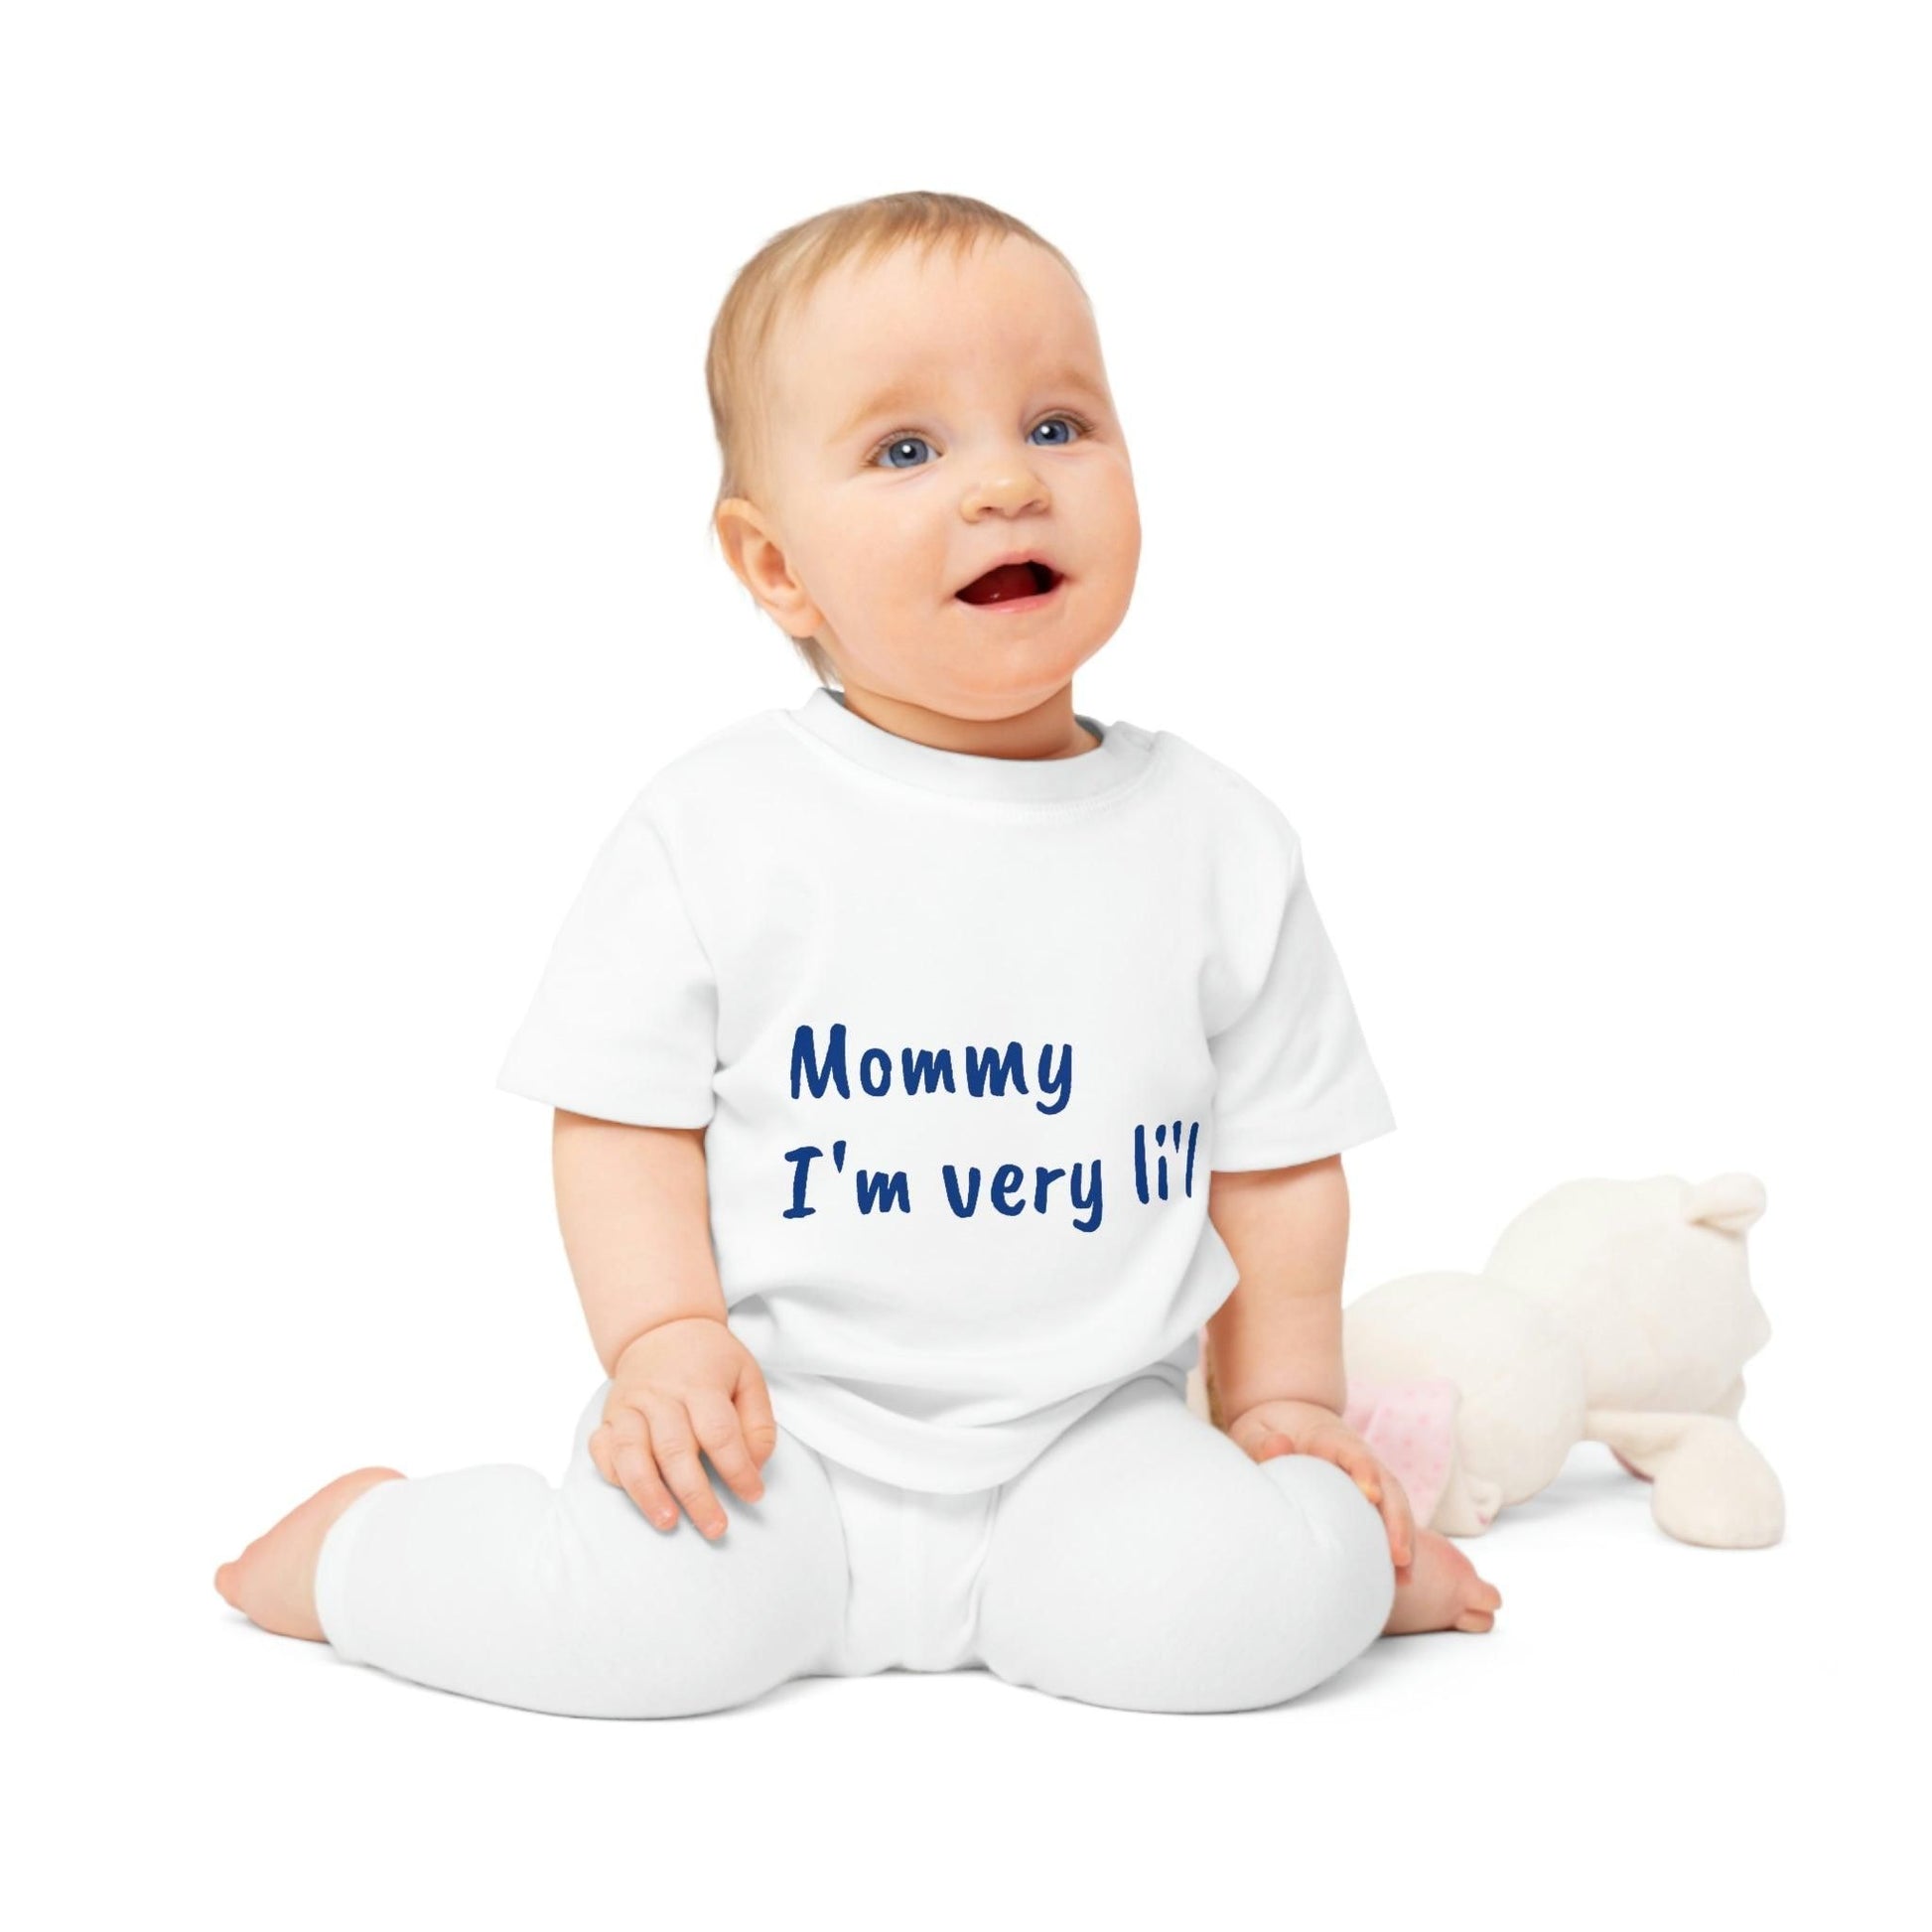 Baby T-Shirt - Mommy I'm very li'l (UK/Ireland) - e-mandi